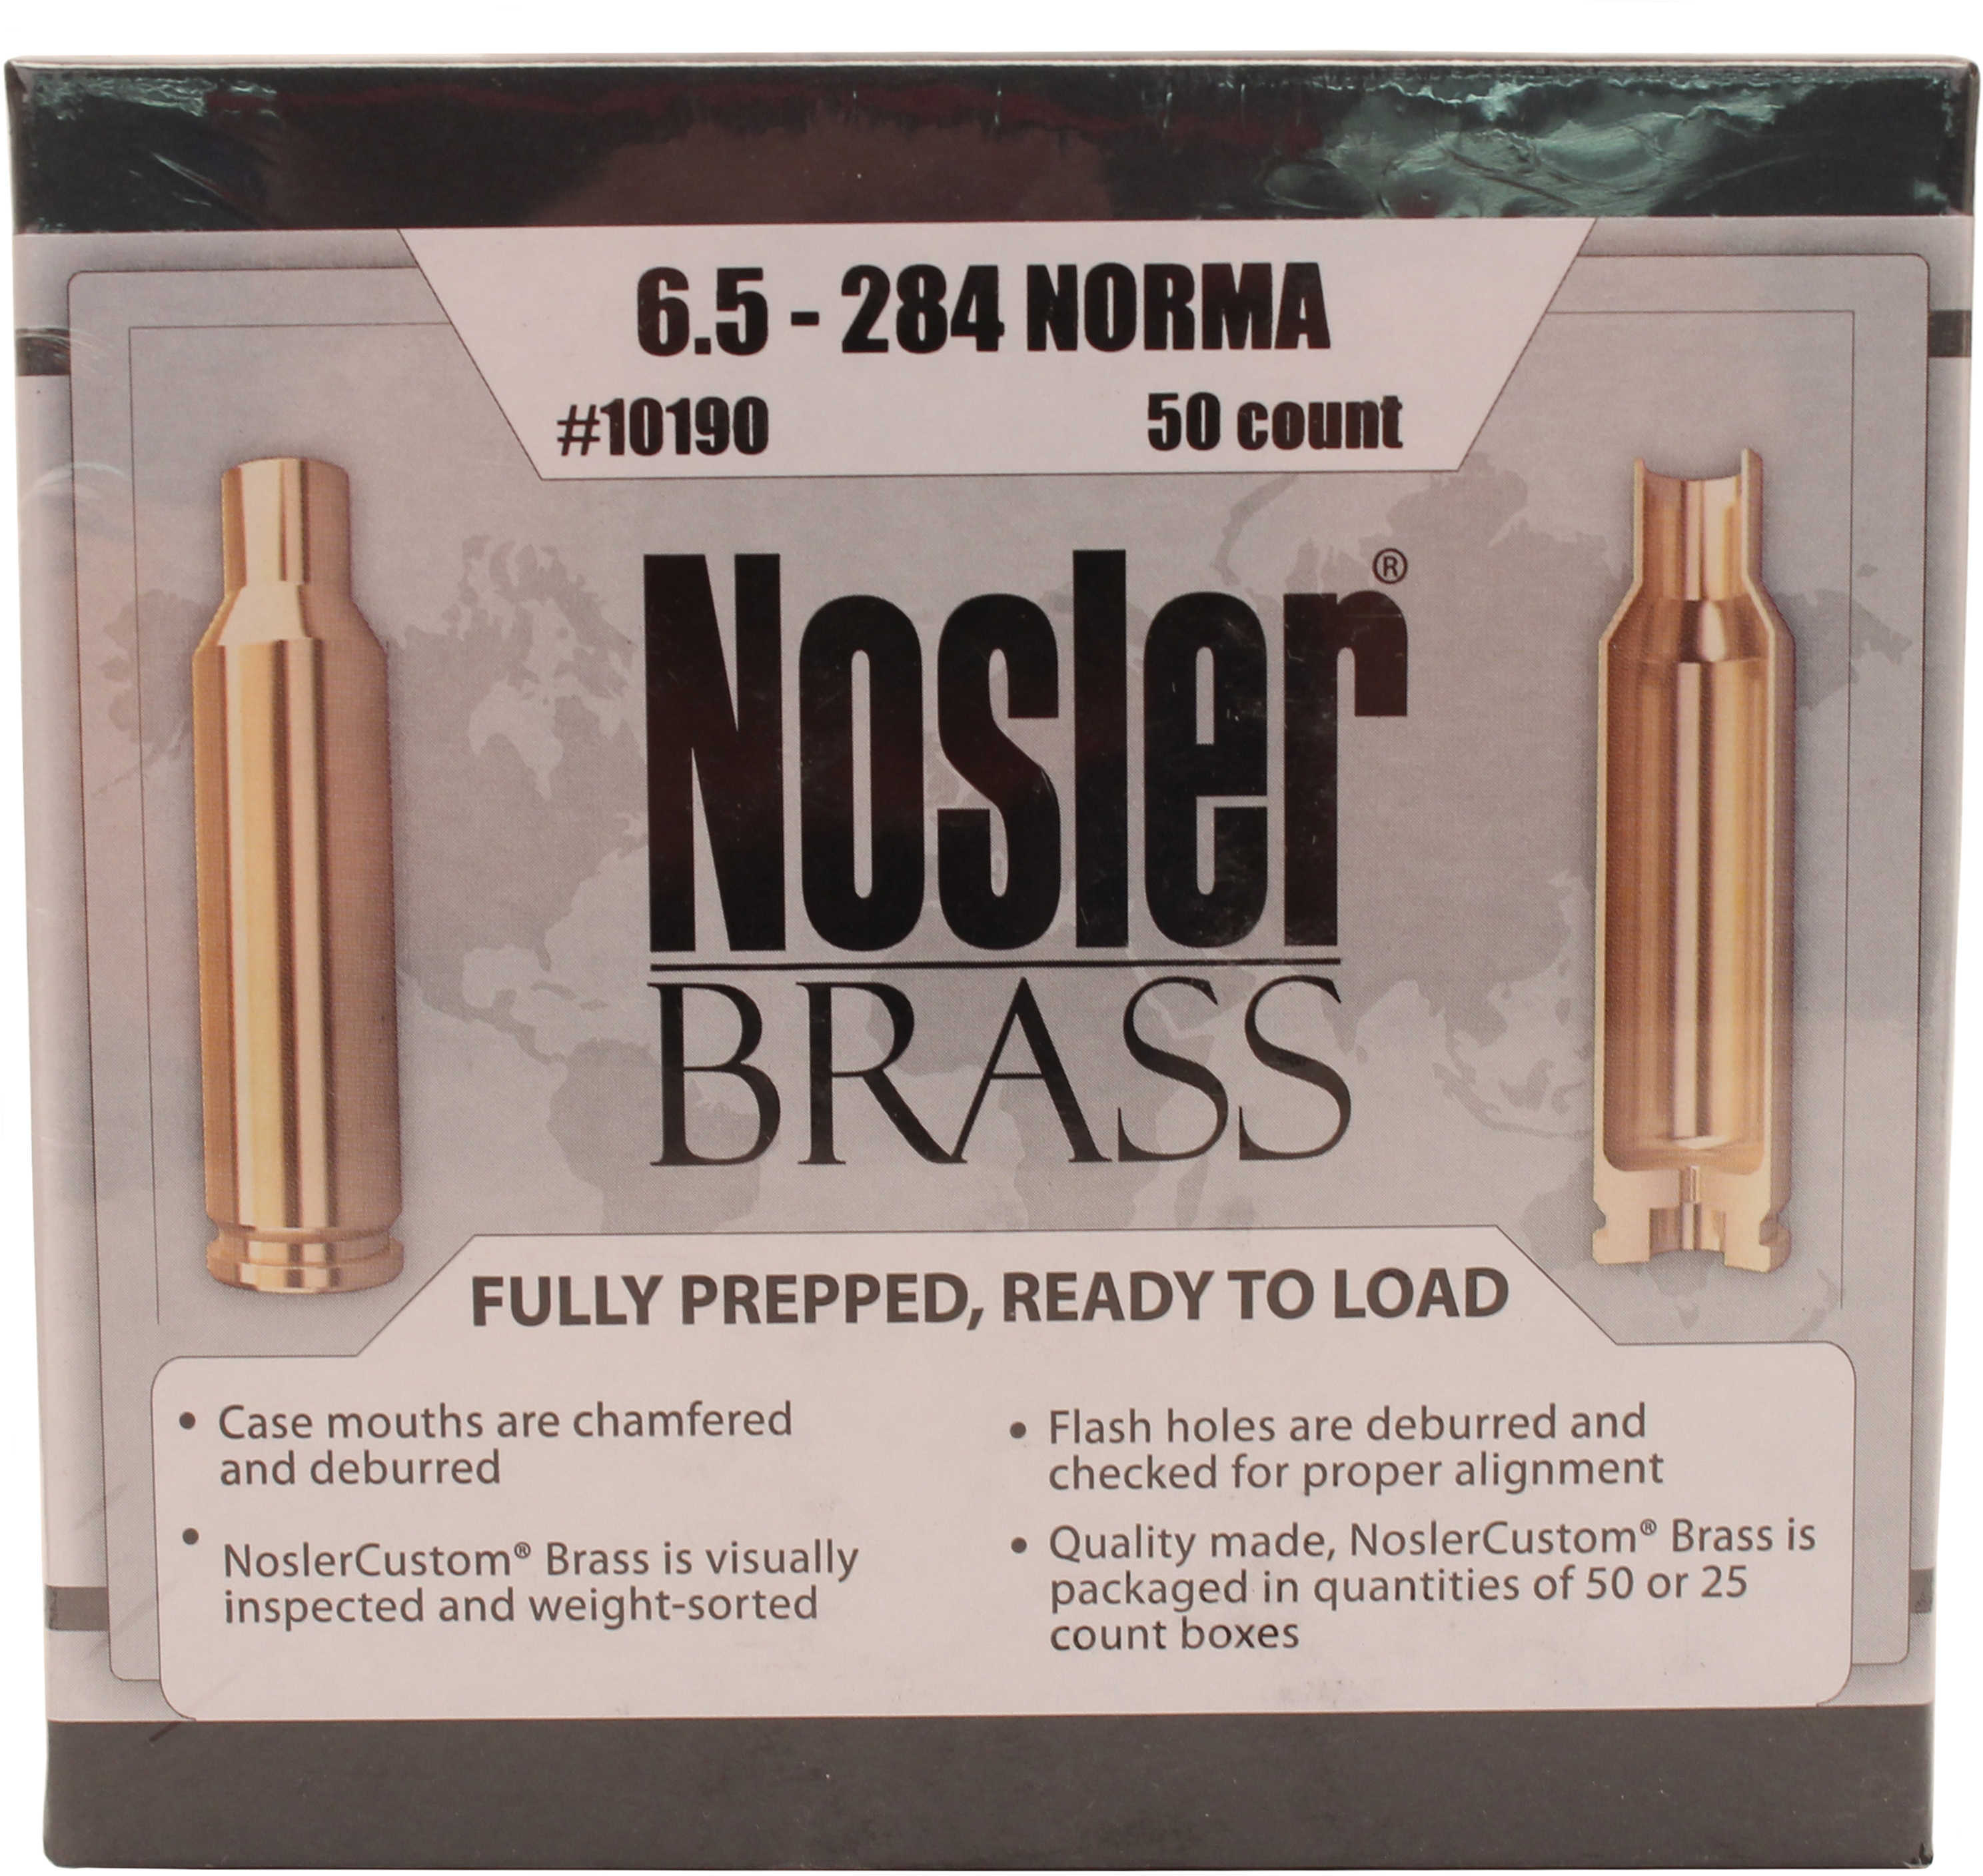 Nosler Unprimed Brass Rifle Cartridge Cases 50/ct 6.5-284 Norma